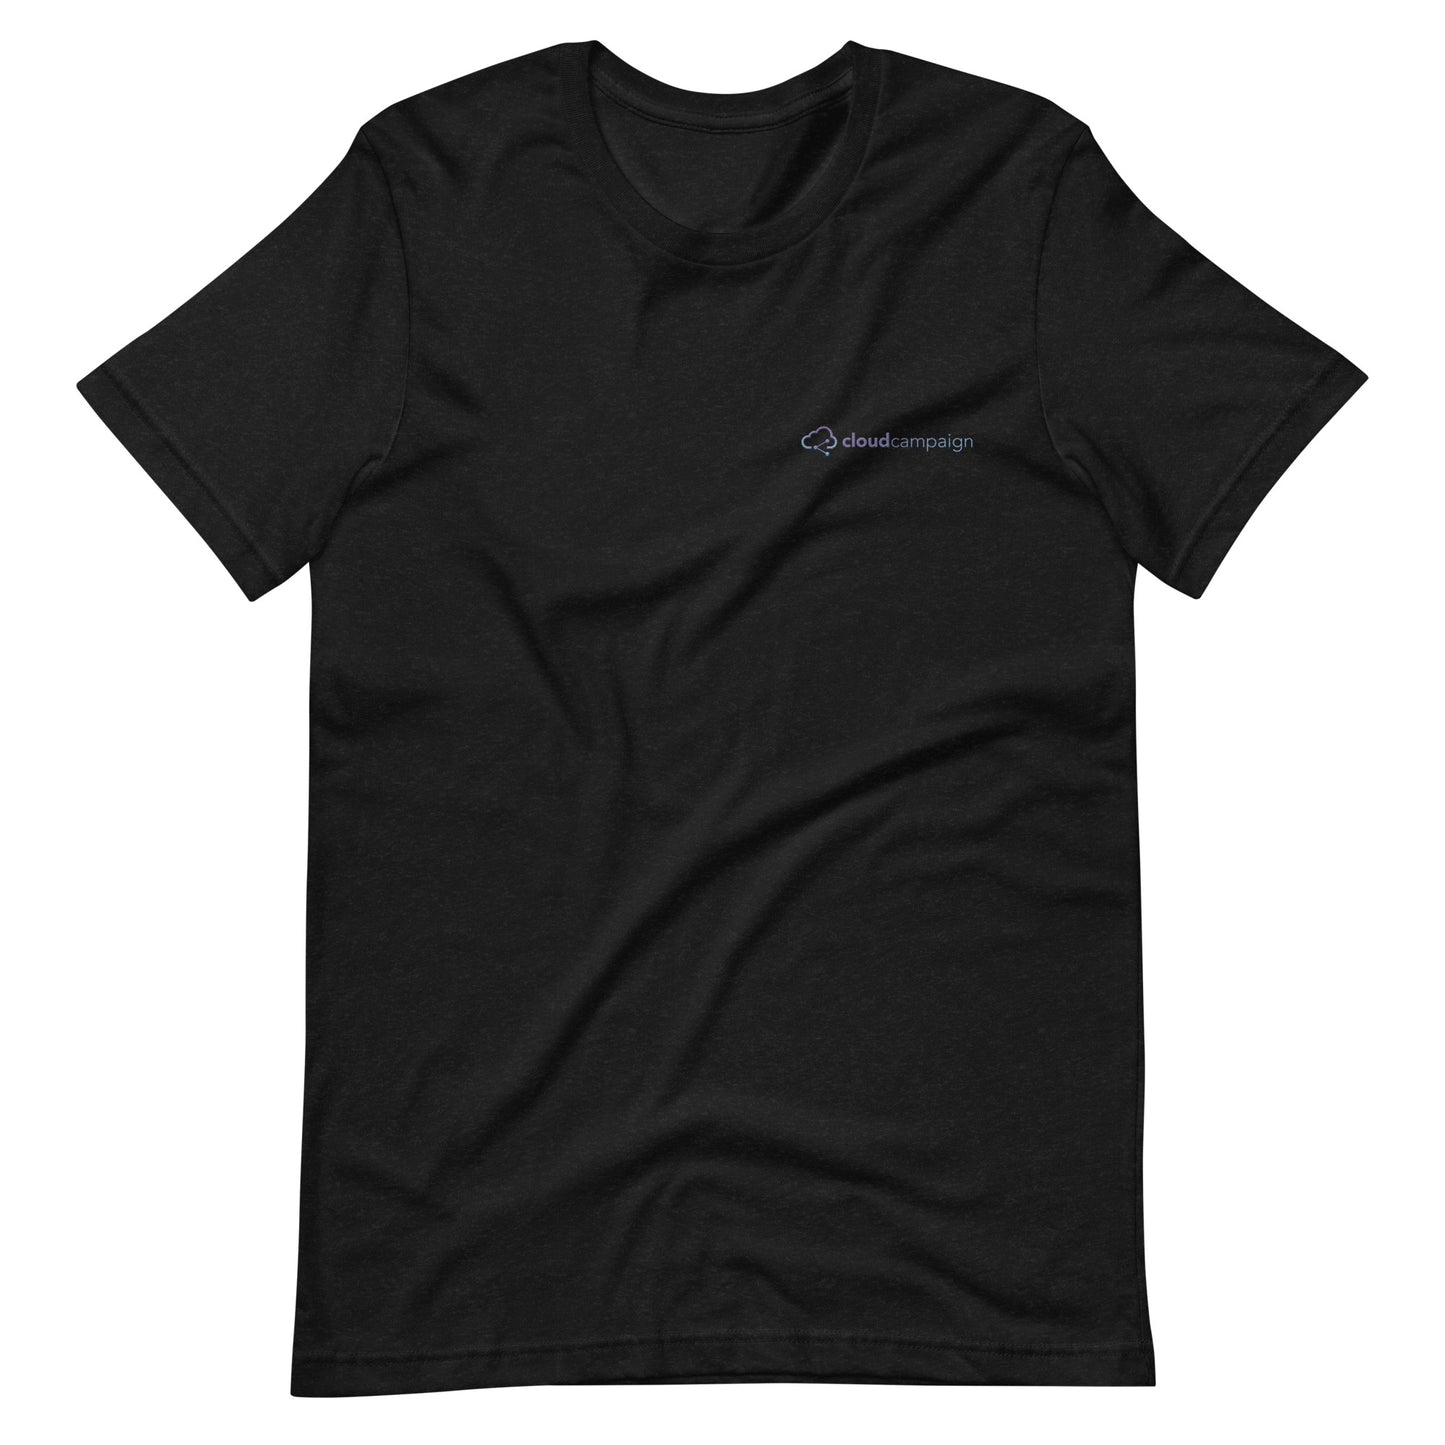 Unisex t-shirt w/ gradient Cloud Campaign embroidery